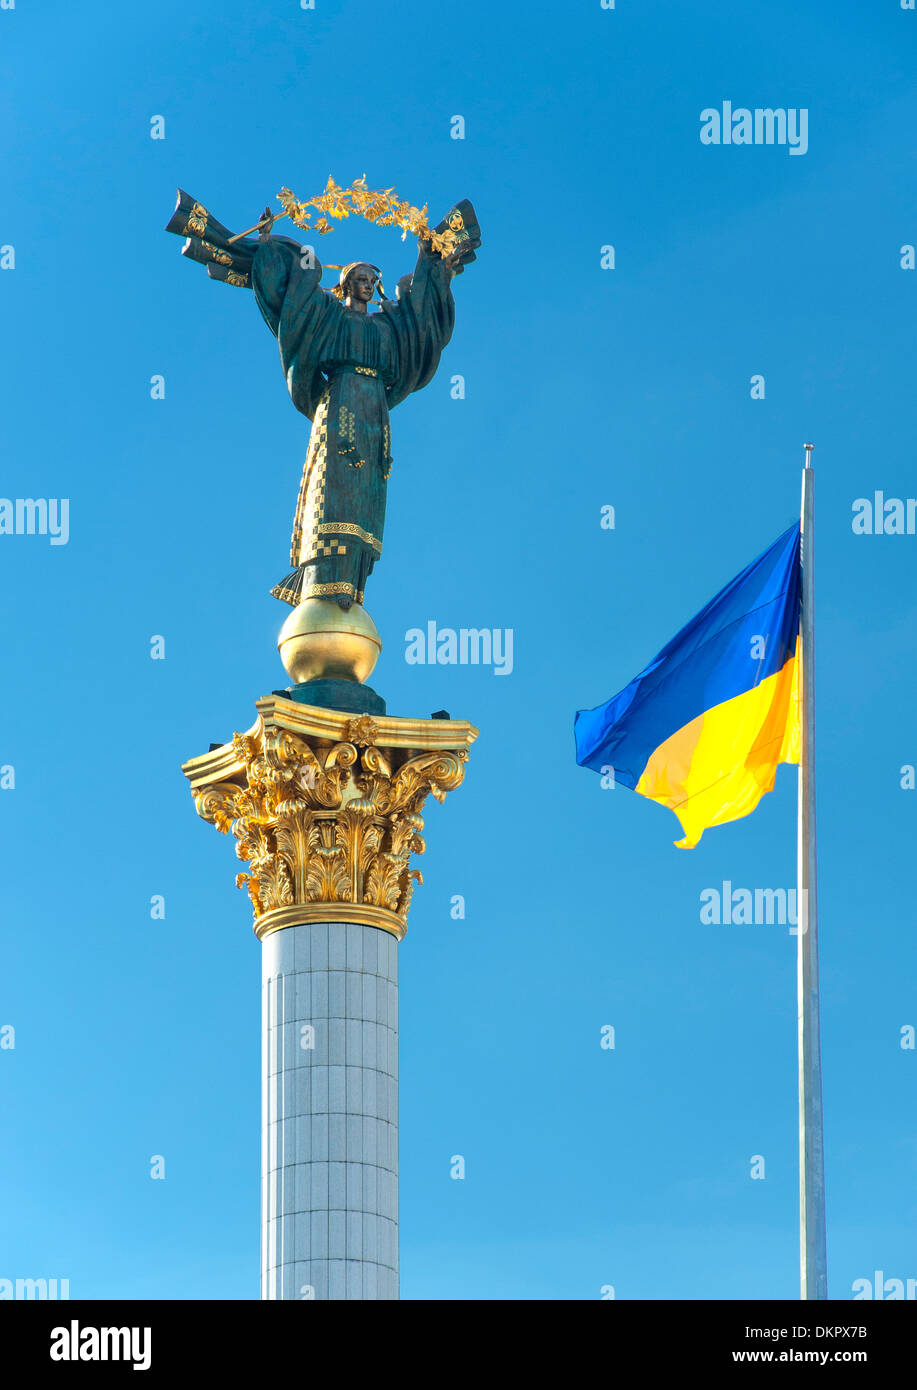 The Ukrainian flag and Independence column in Independence Square (Maidan Nezalezhnosti) in Kiev, the capital of Ukraine. Stock Photo